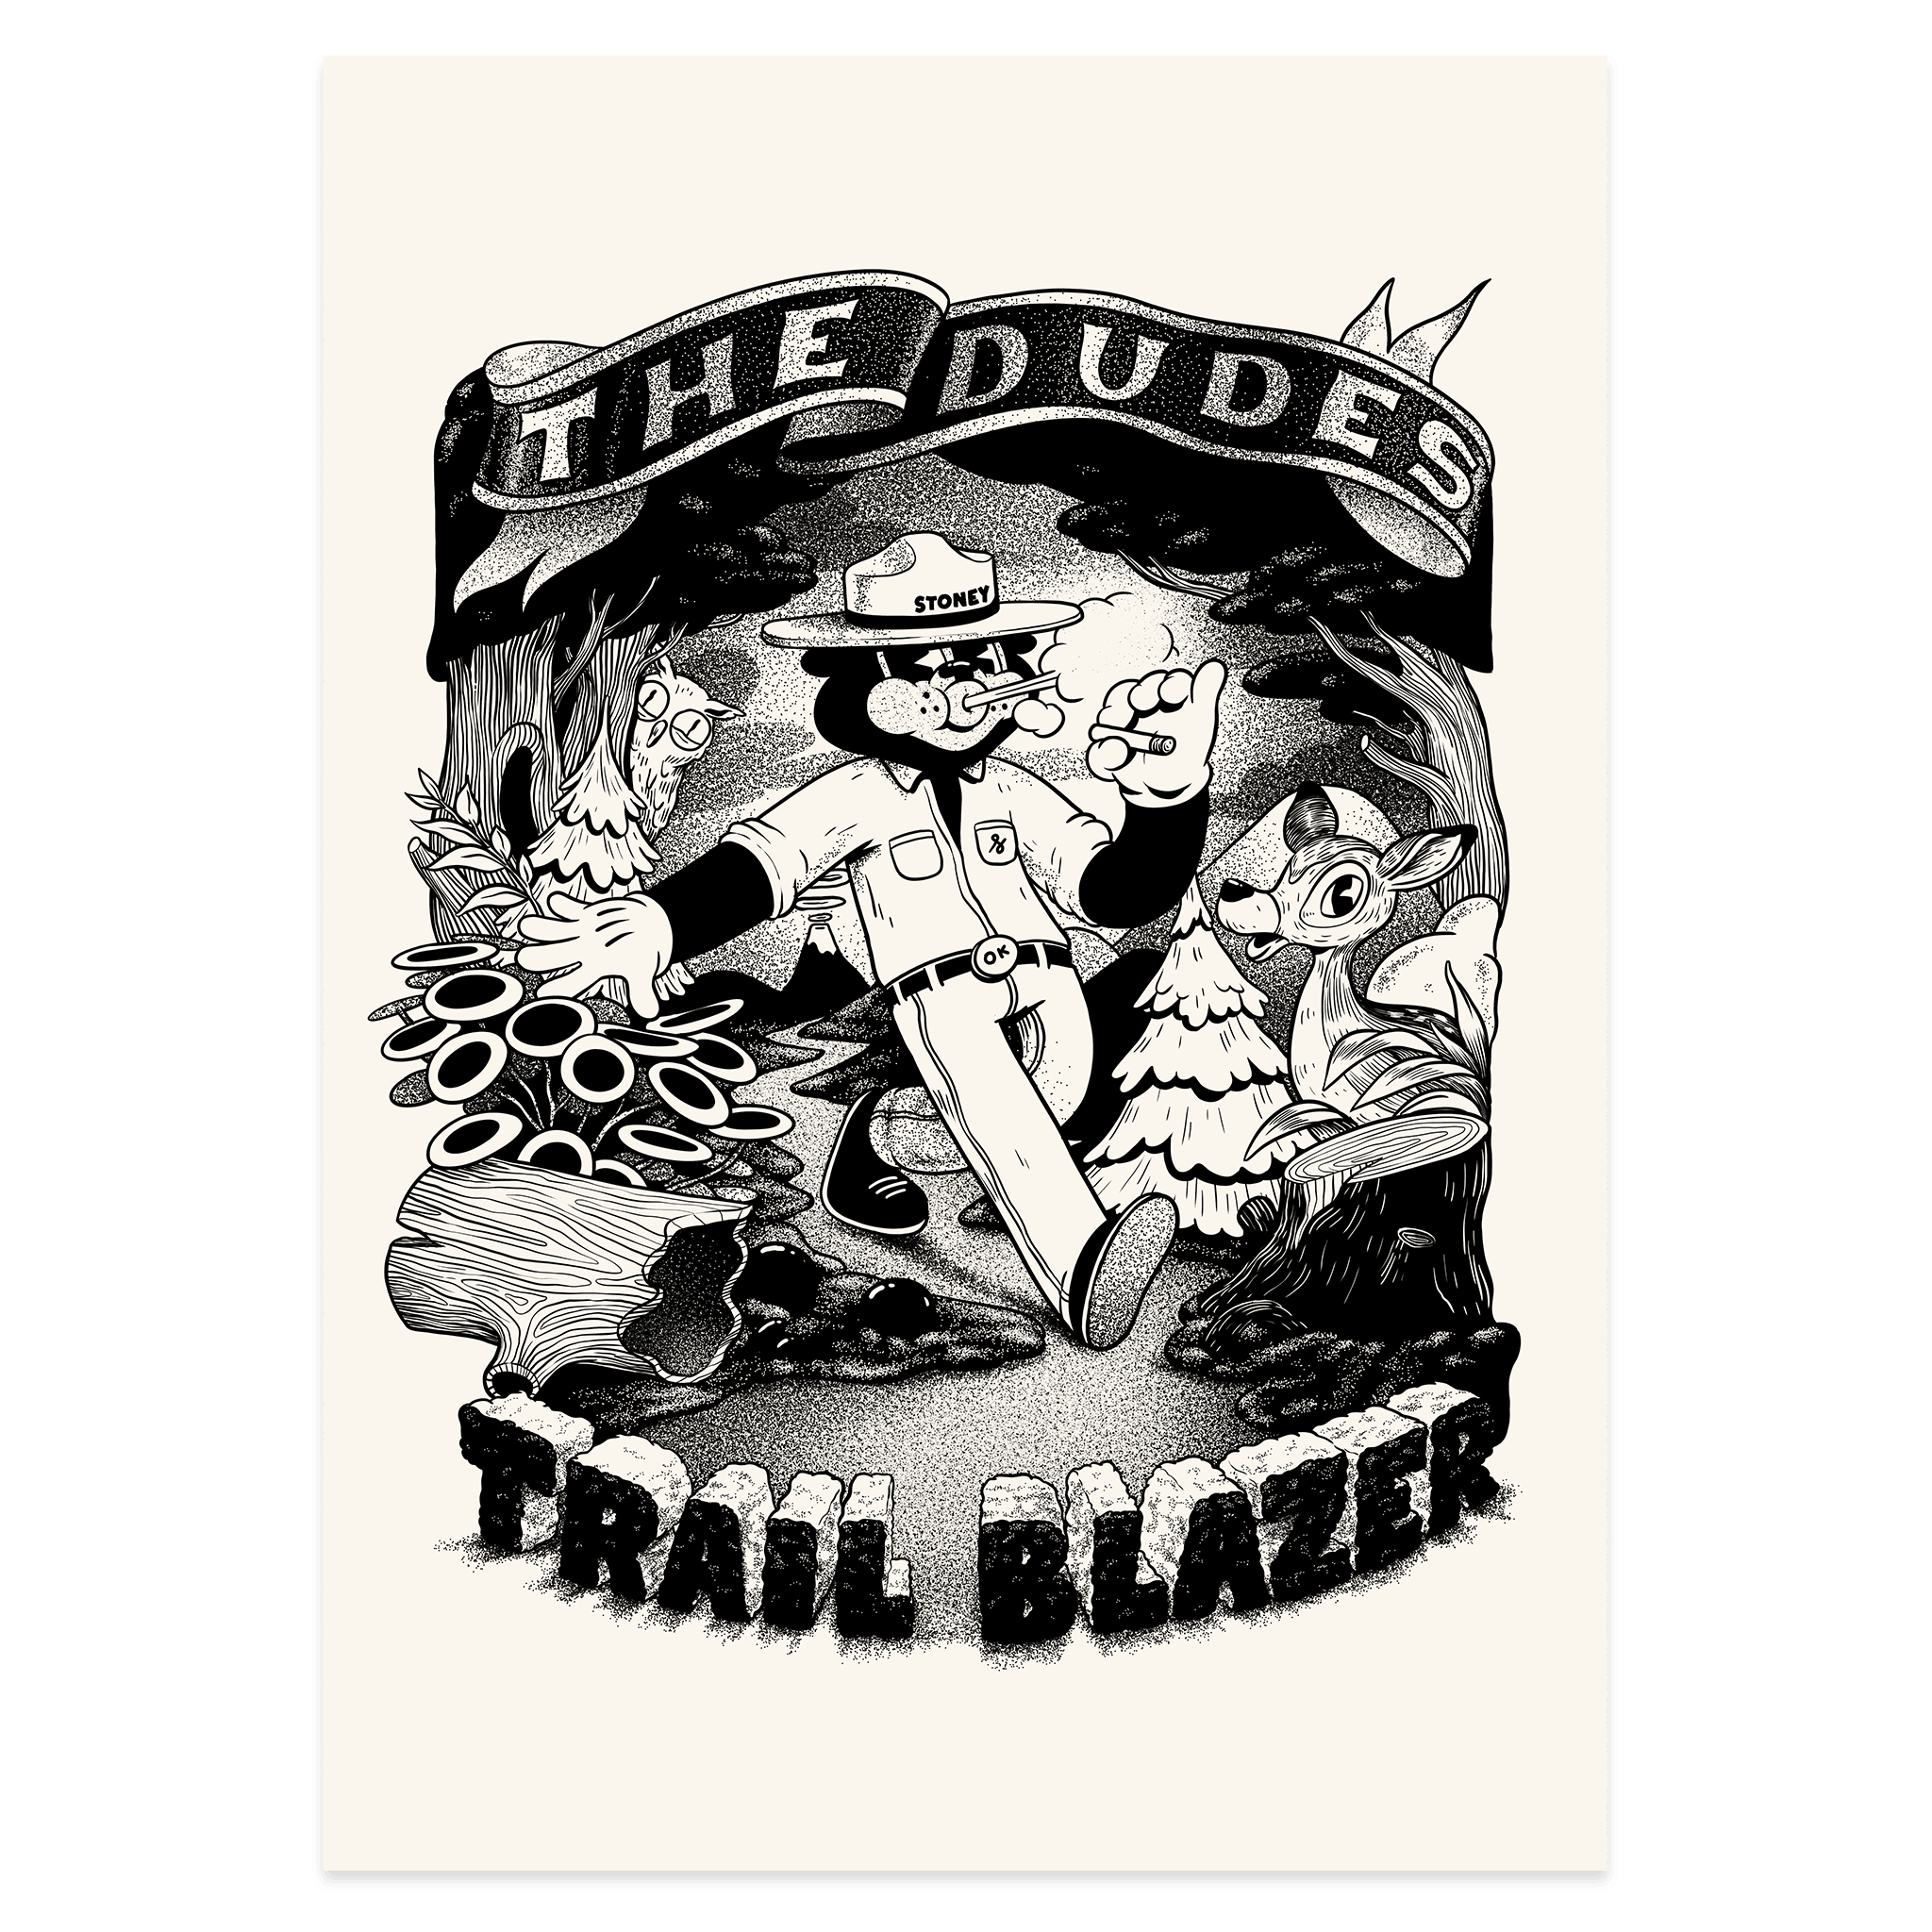 Trail Blazer - Dudes Factory